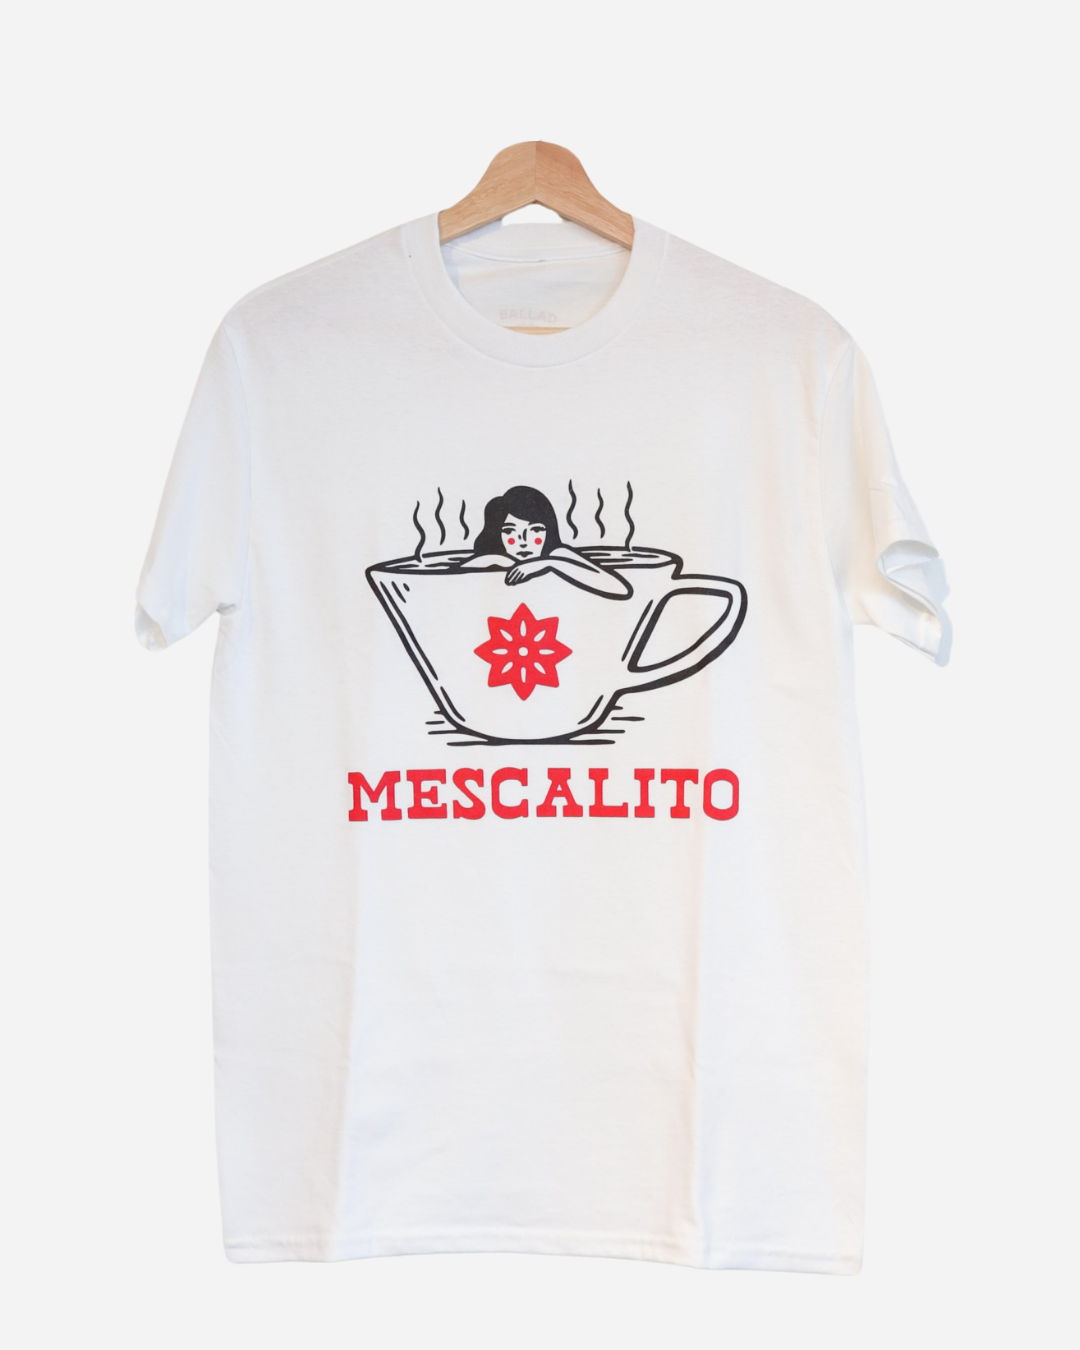 Coffee Jacuzzi Girl | Mescalito - Coffee - Shirt - Men’s